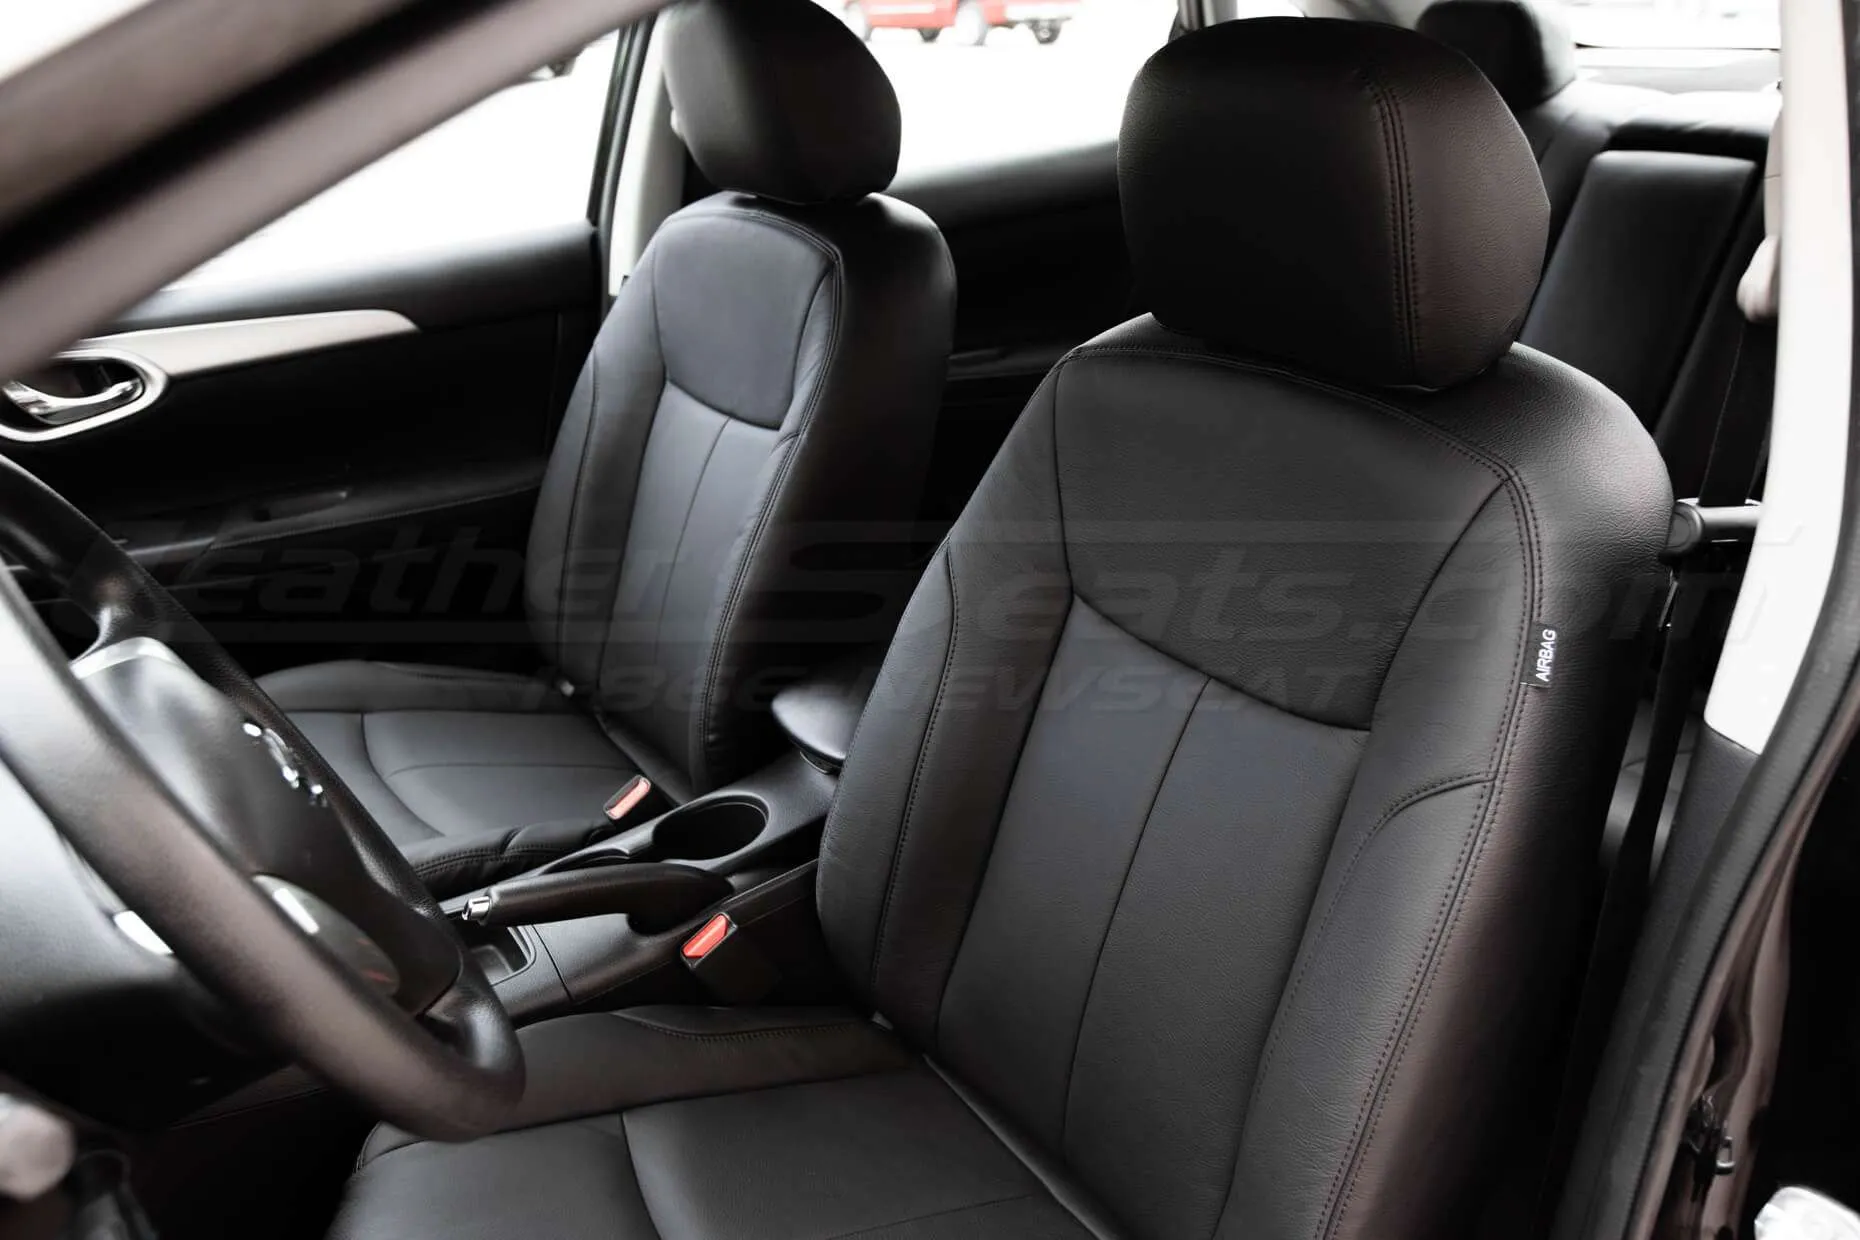 Nissan Sentra Leather Seats - Black - Installed - Front driver backrest and headrest